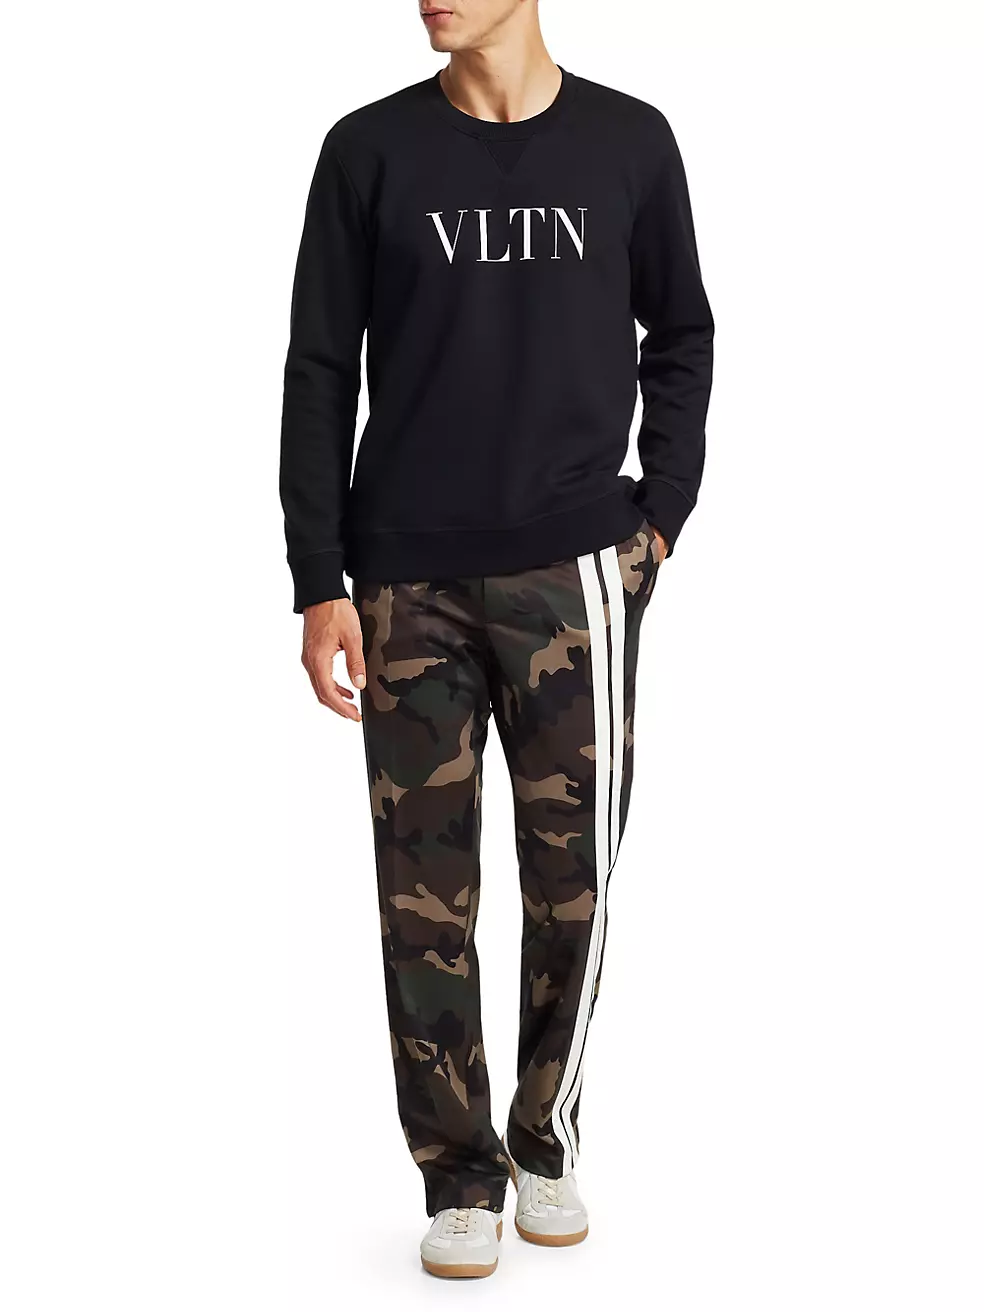 Shop Valentino VLTN Crew Neck Sweatshirt | Saks Fifth